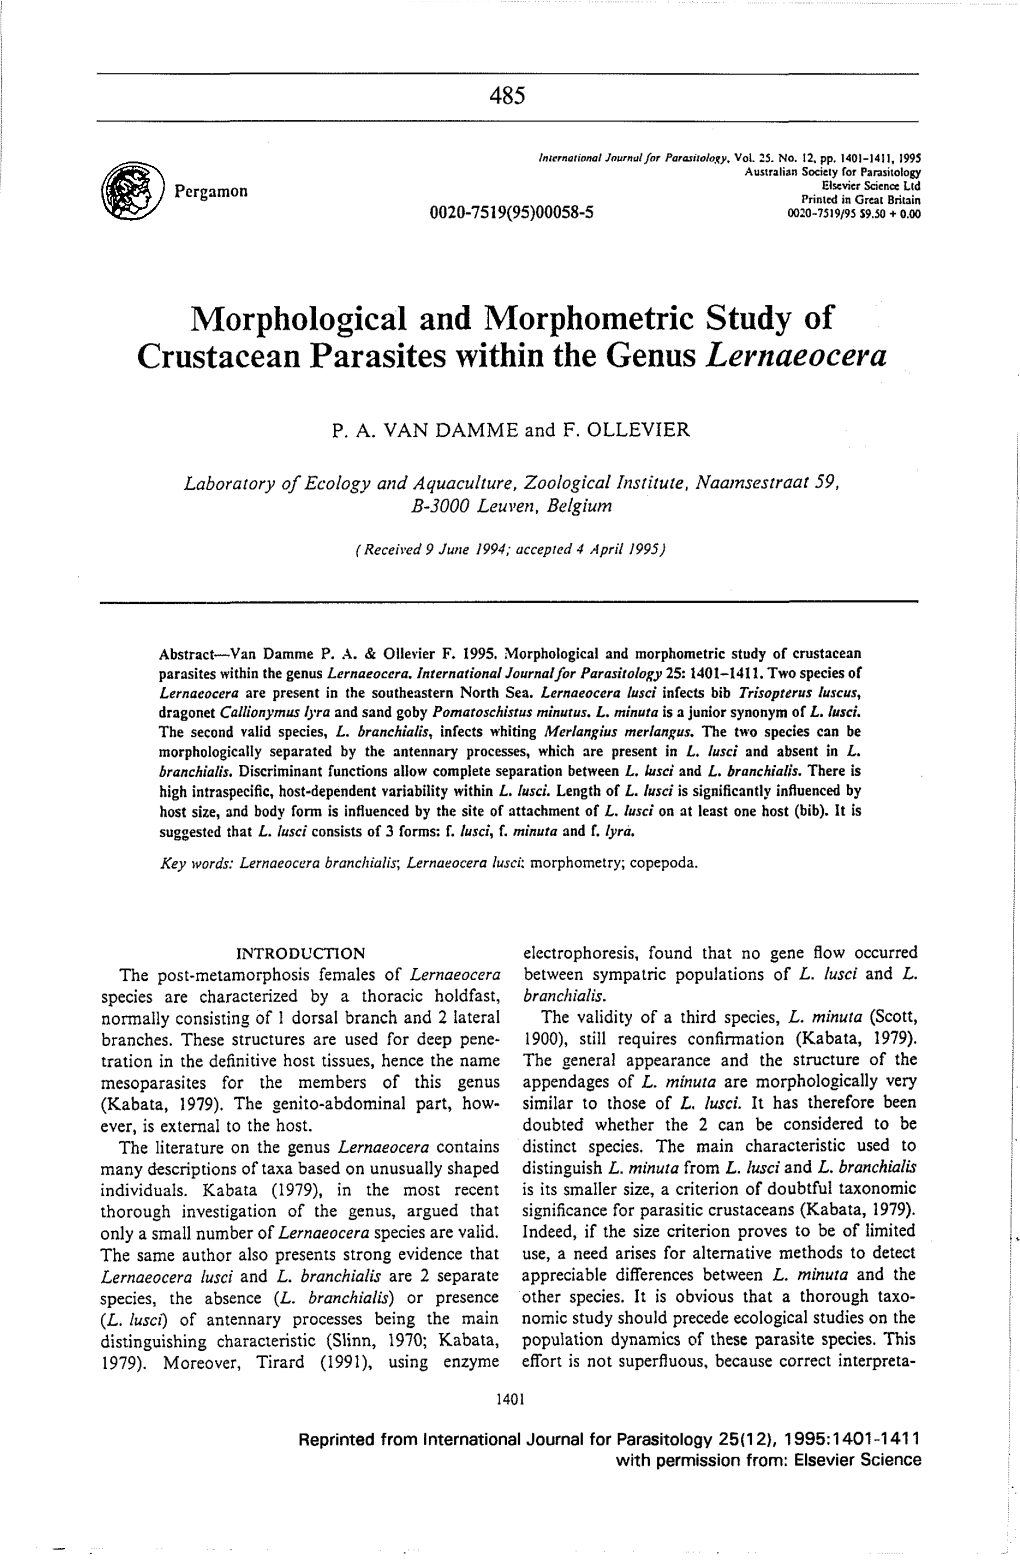 Morphological and Morphometrie Study of Crustacean Parasites Within the Genuslernaeocera